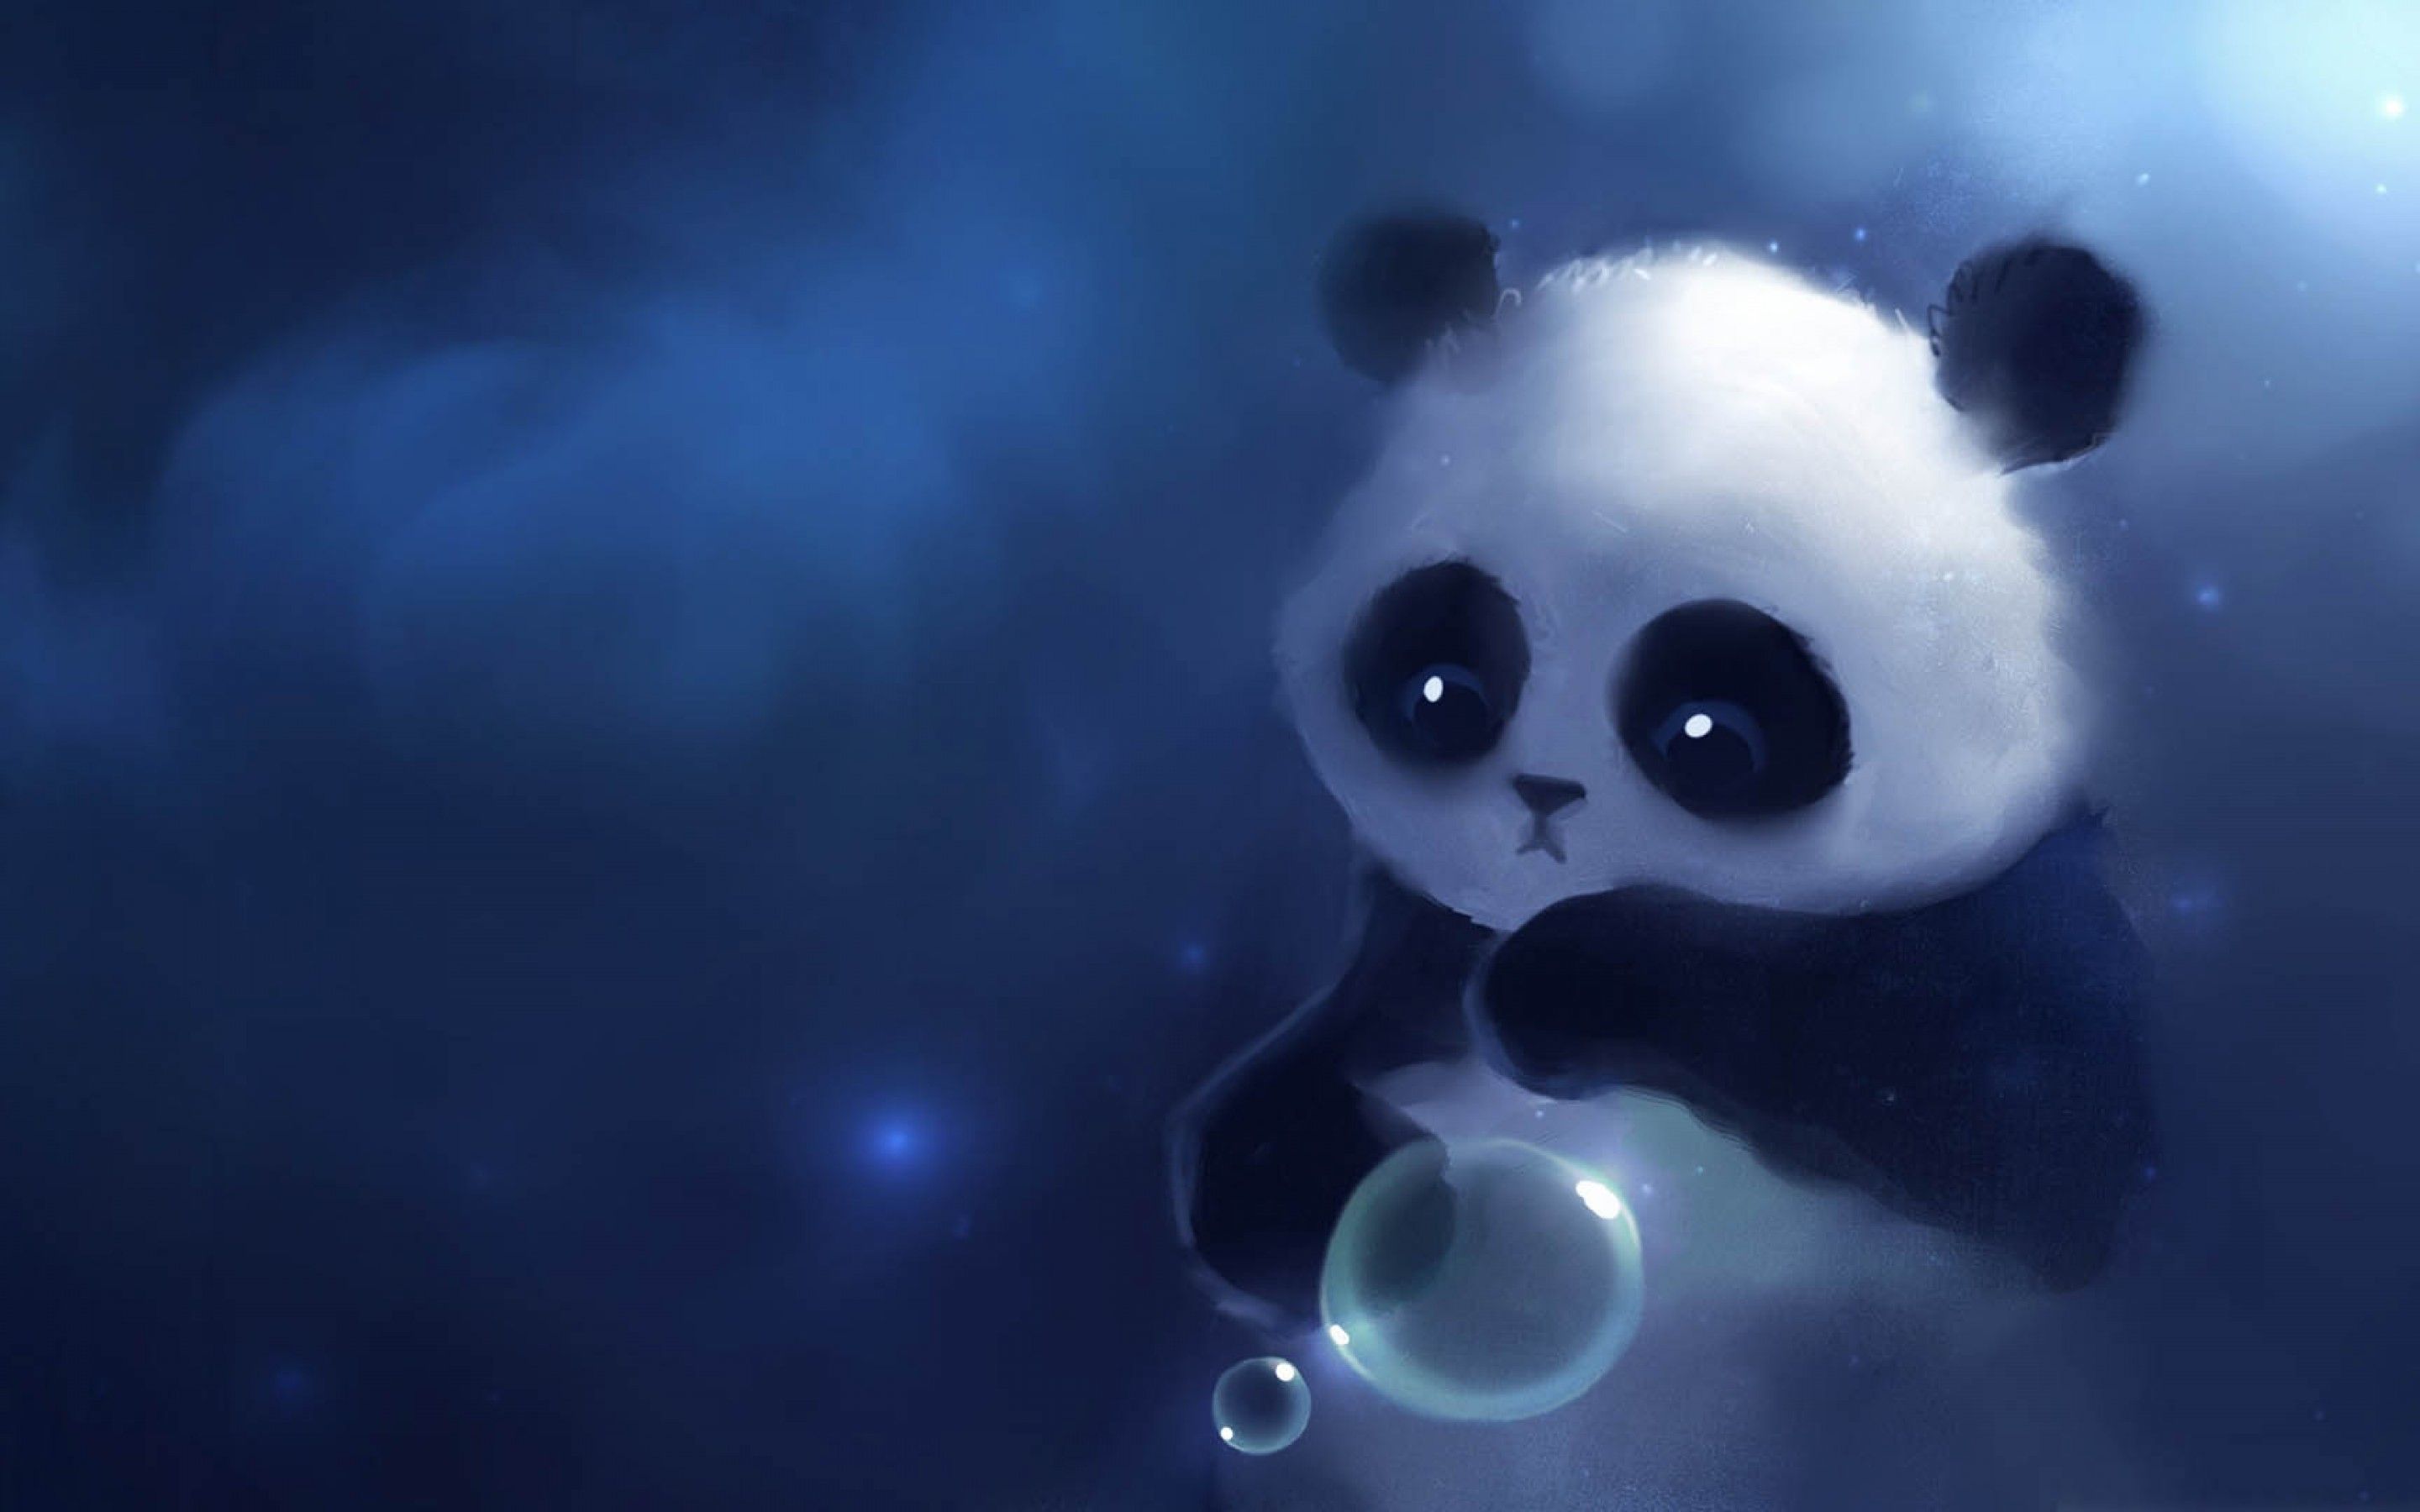 Cute Cartoon Panda Wallpapers on WallpaperDog